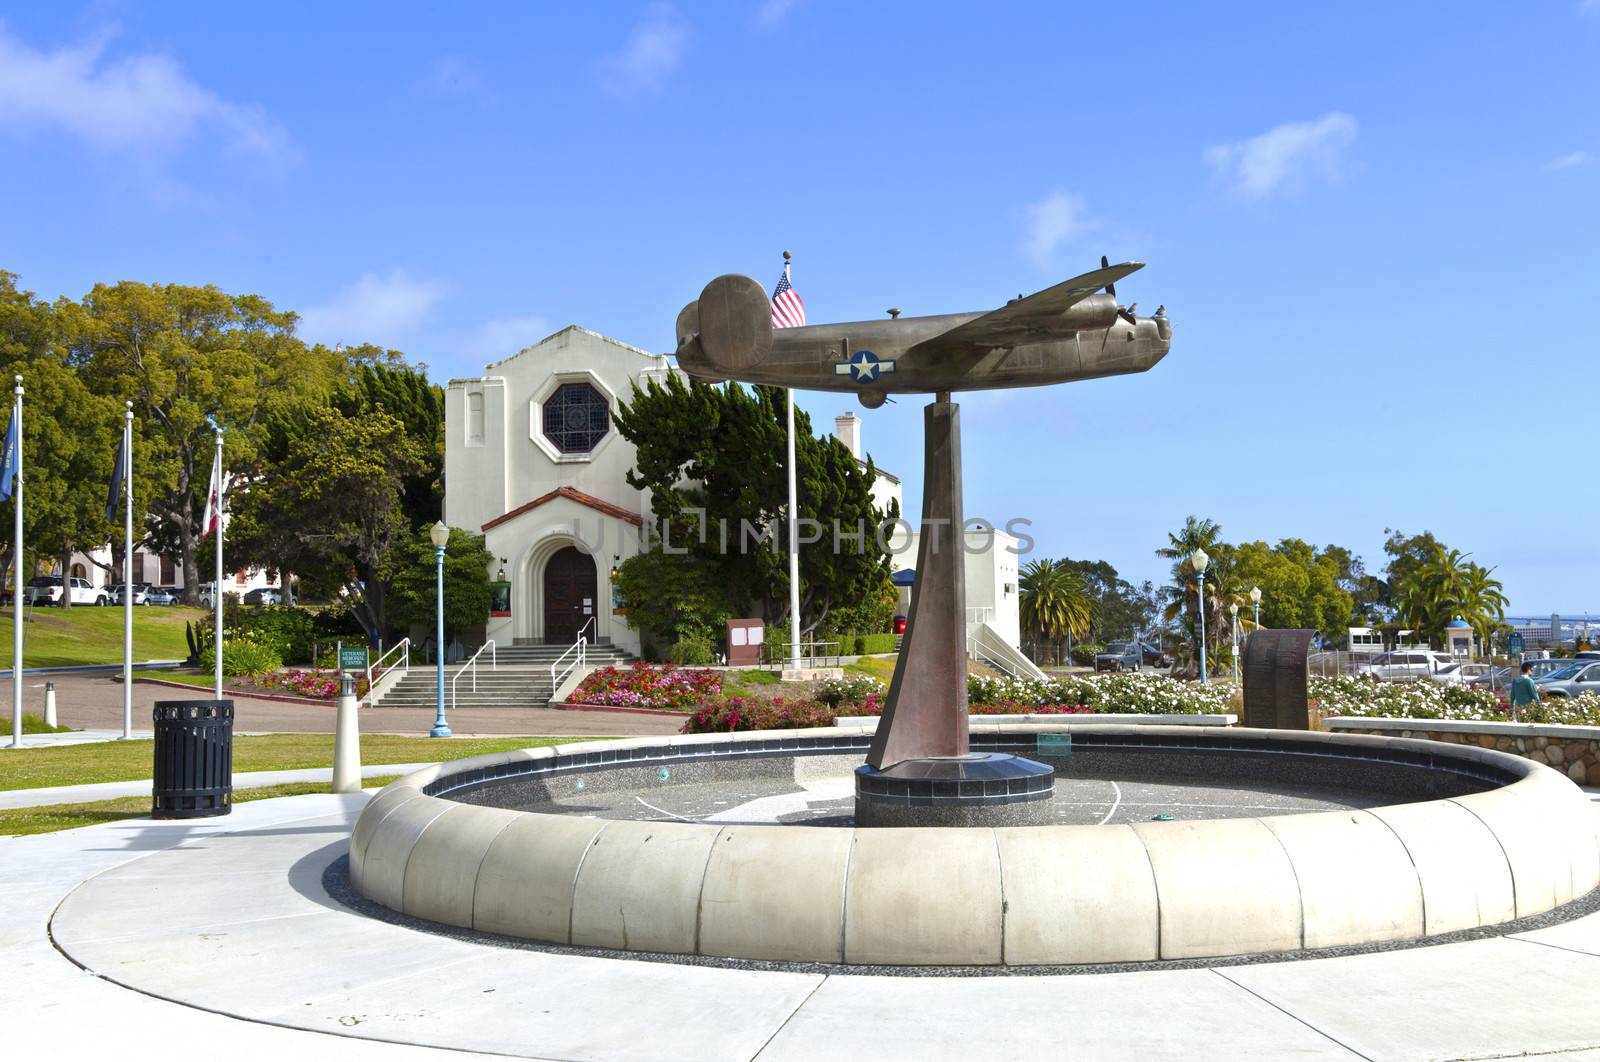 Veterans and museum memorial center in San Diego california.